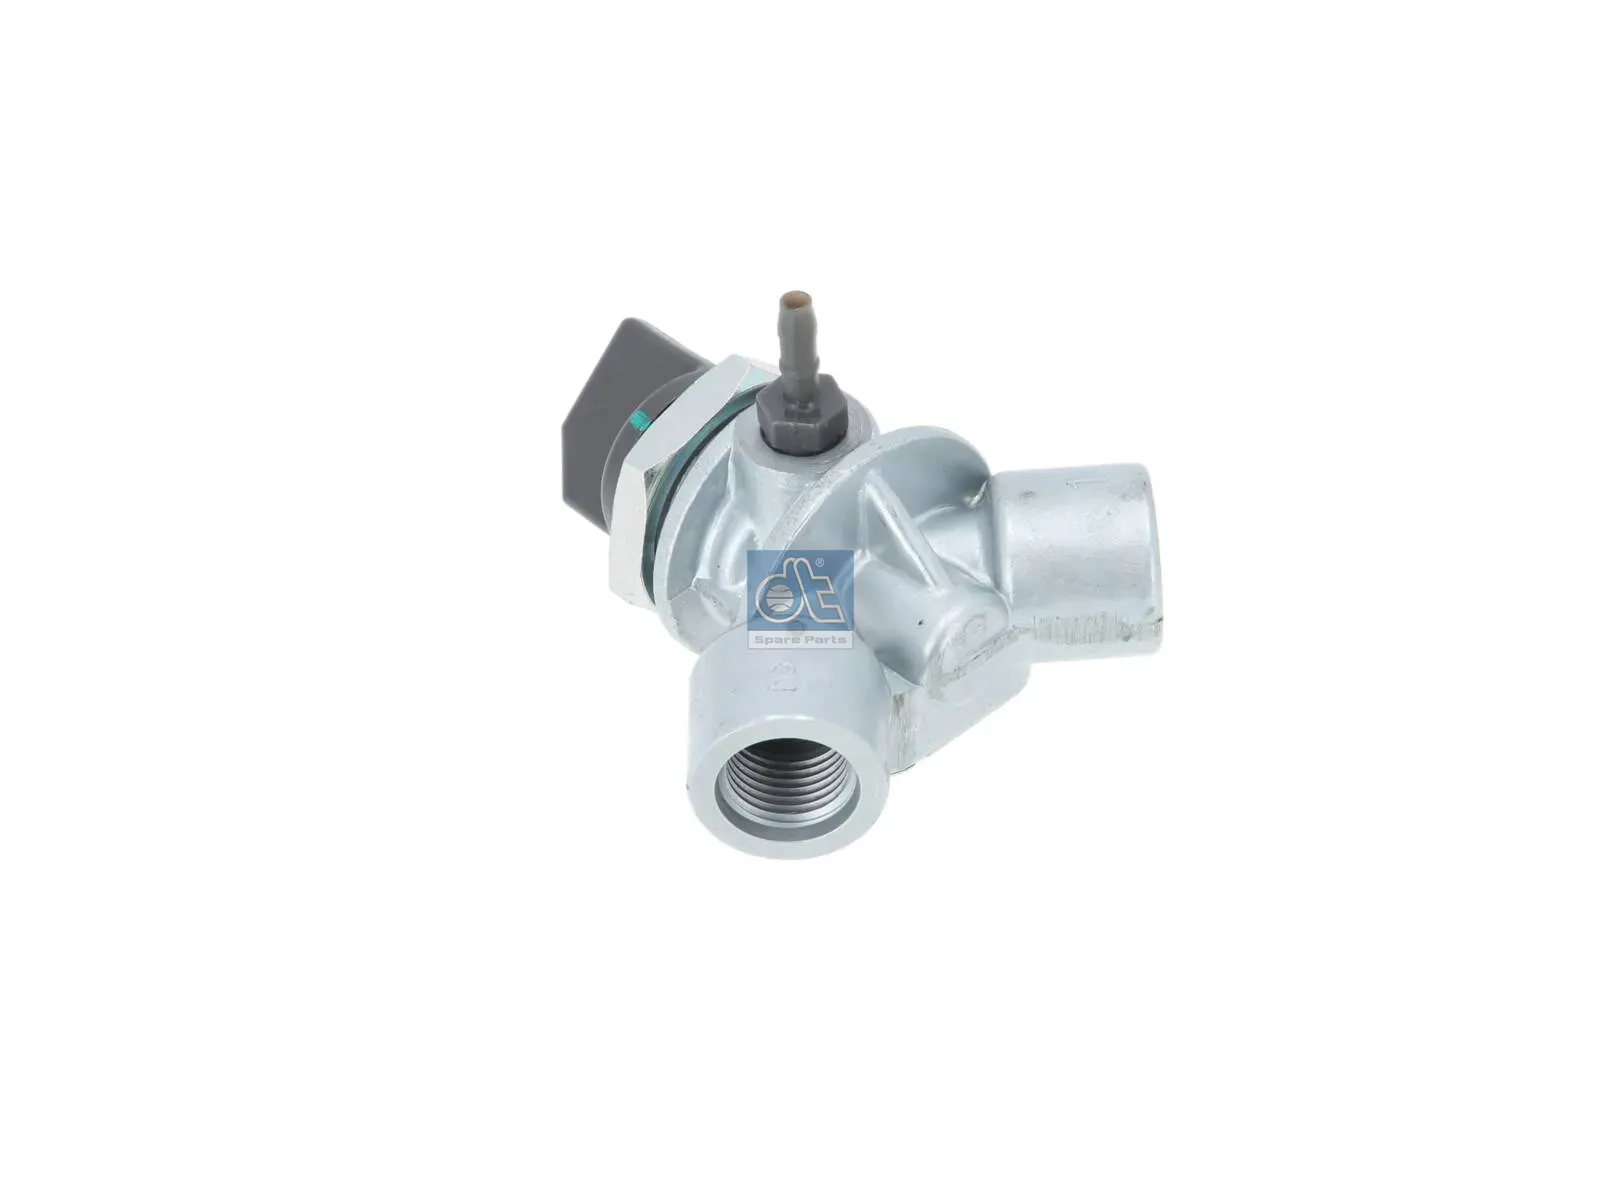 Multiway valve